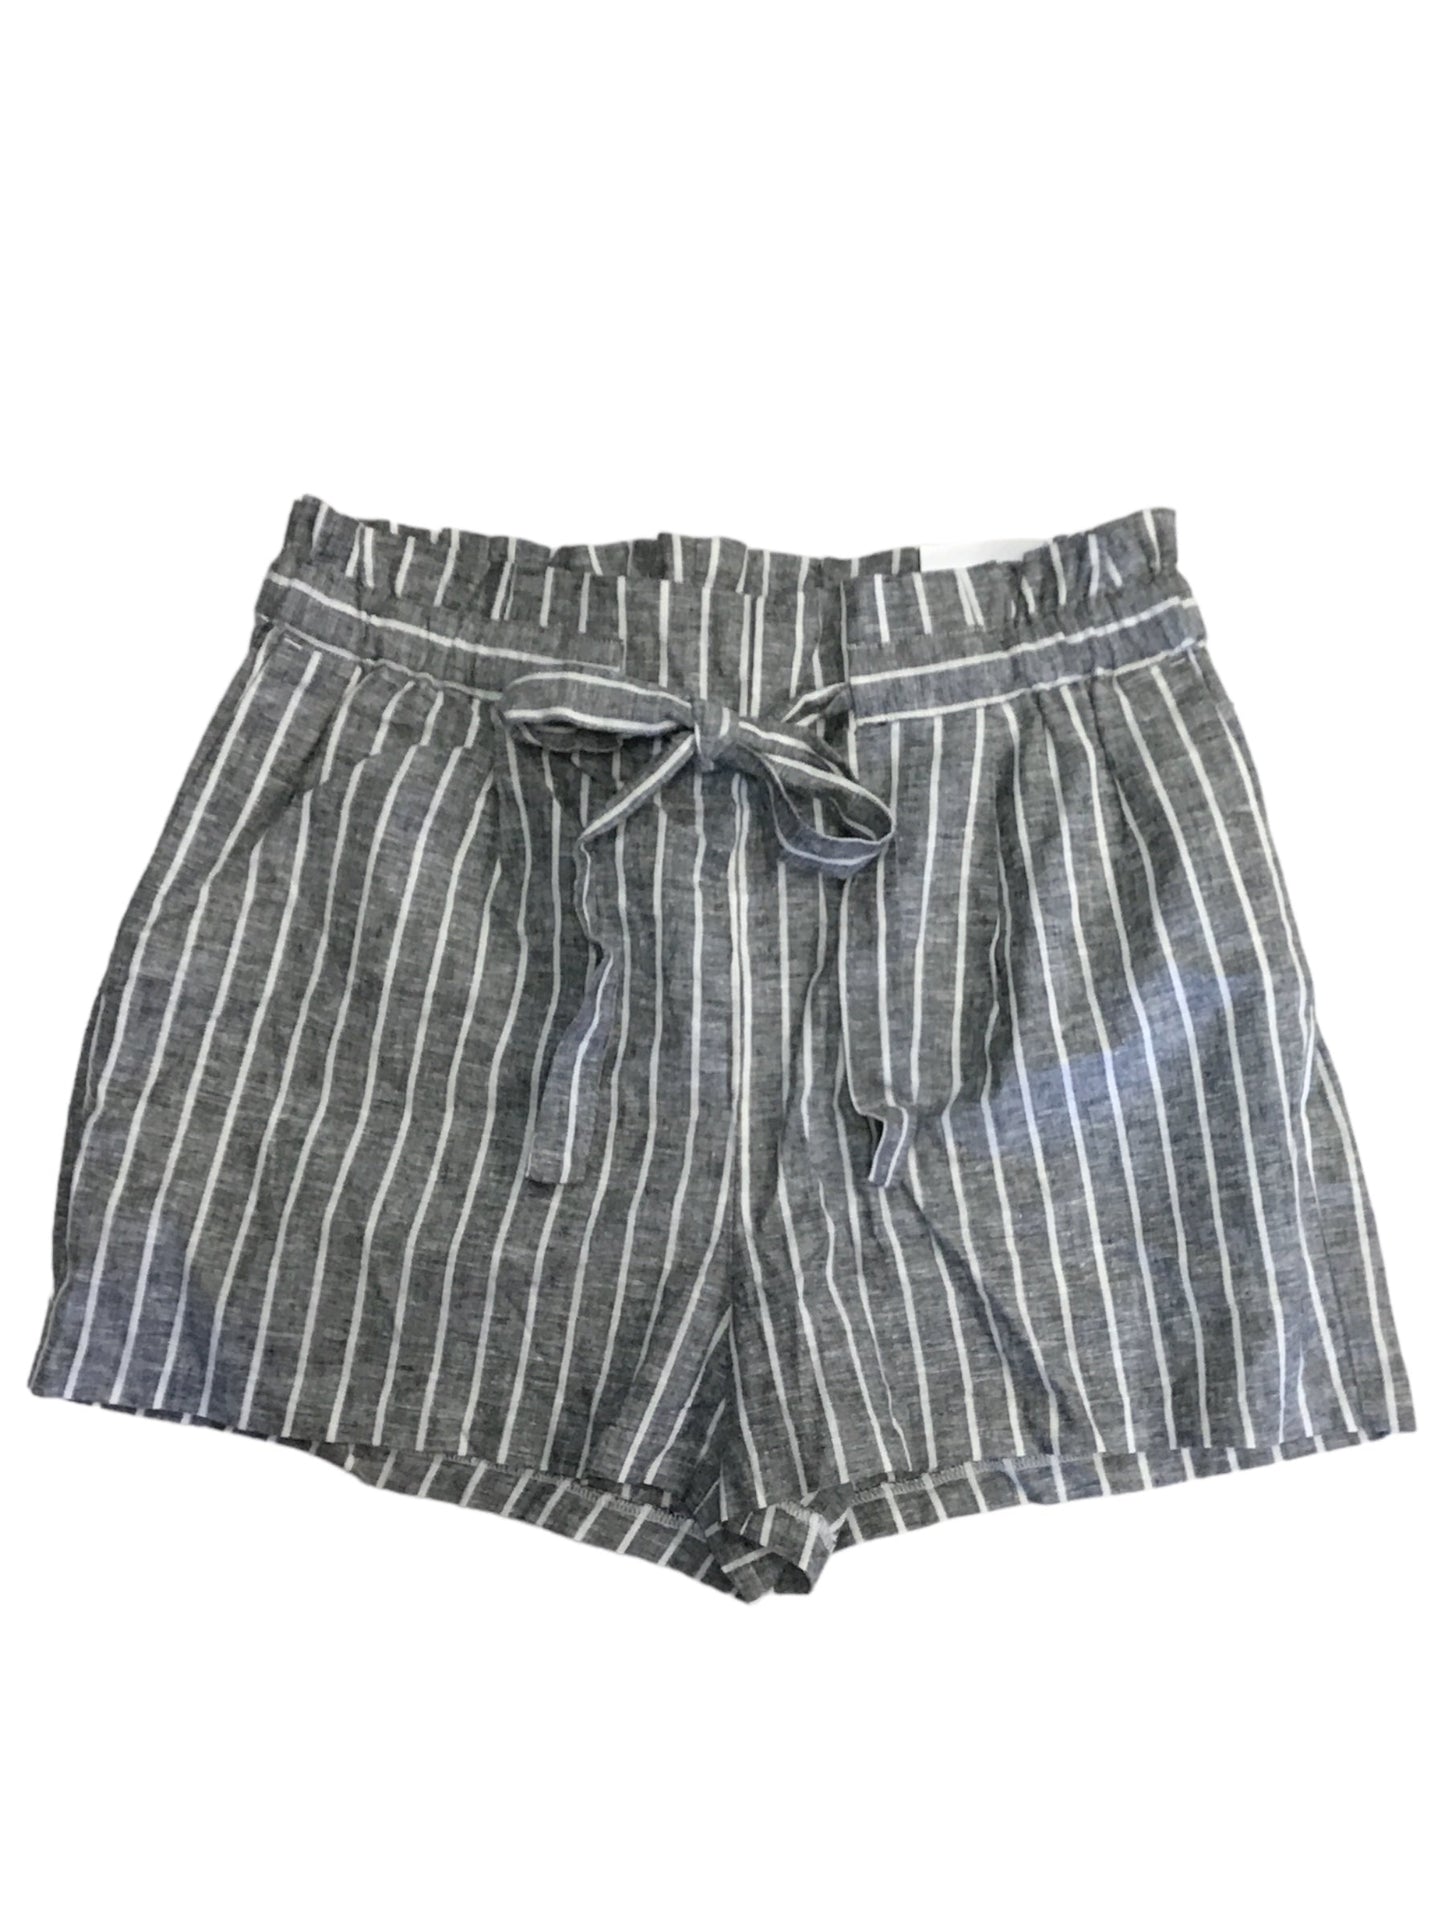 Striped Pattern Shorts Express, Size M